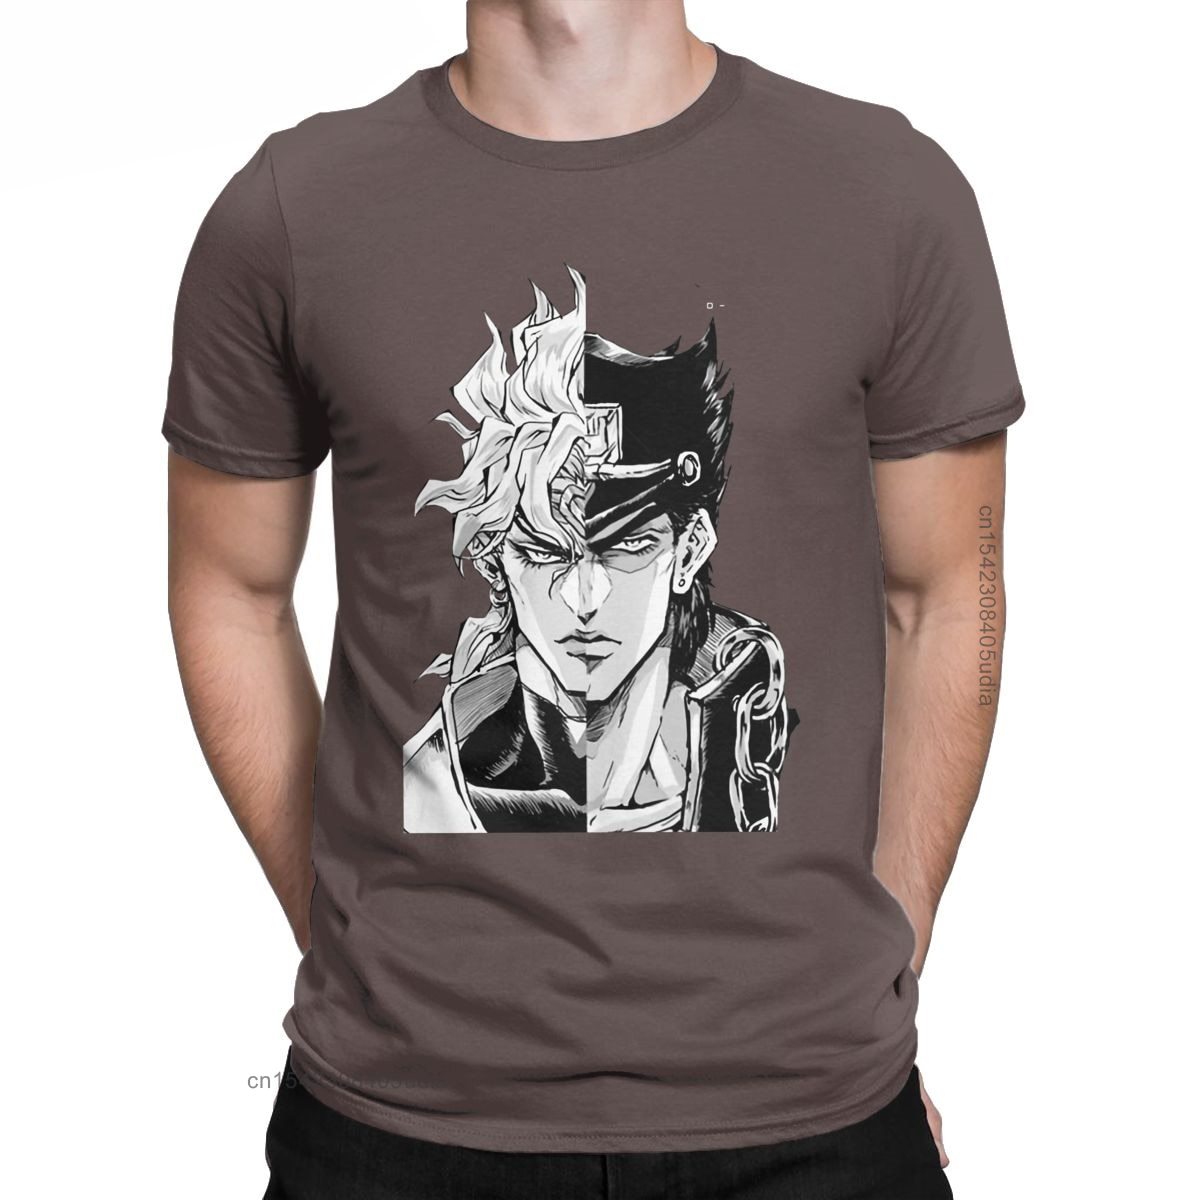 JoJo’s Bizarre Adventure – Jotaro and Dio Themed Badass T-Shirts (10+ Designs) T-Shirts & Tank Tops